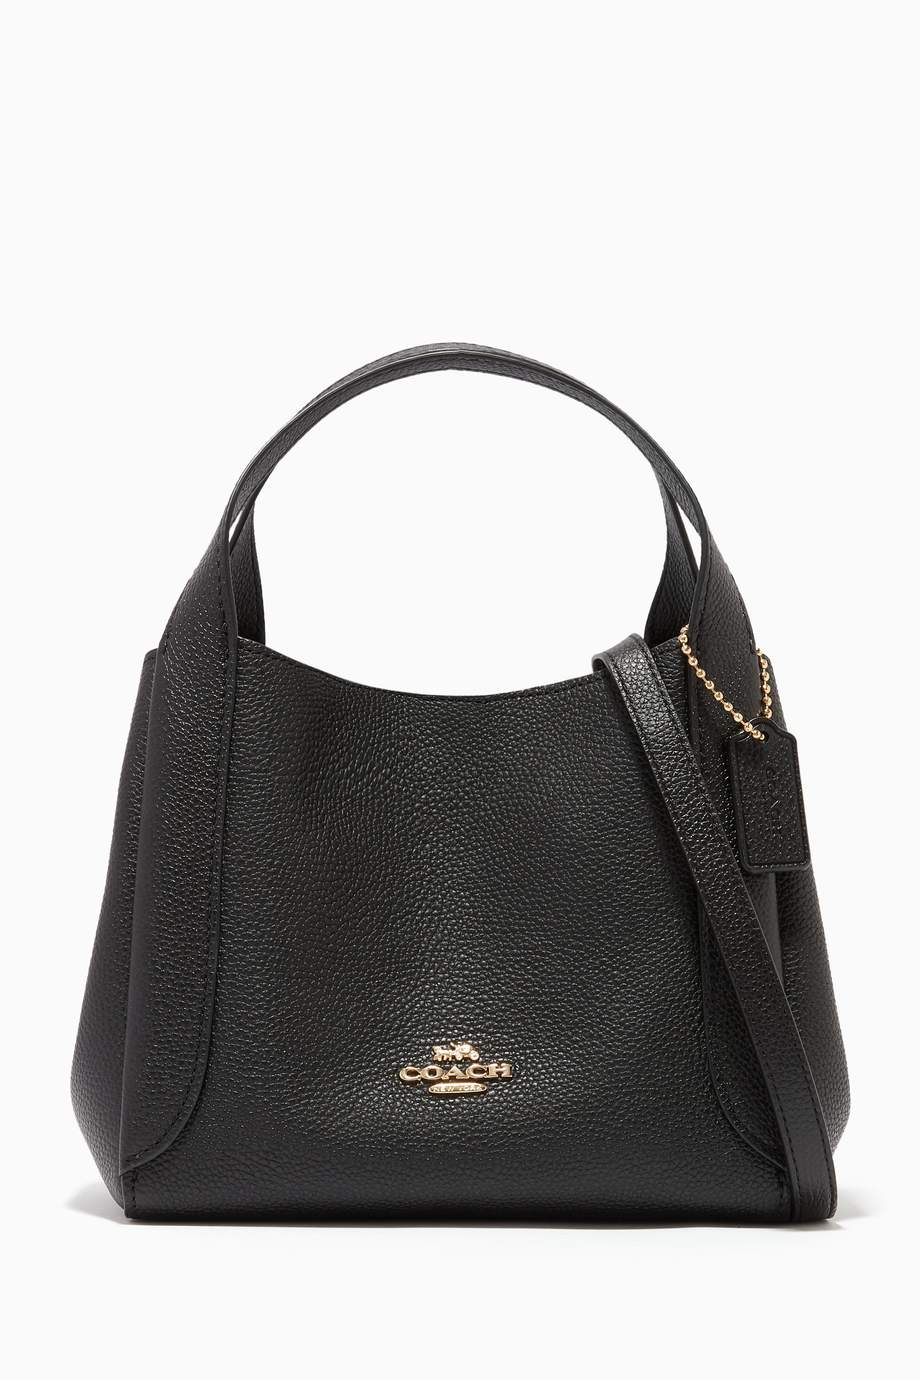 Shop Coach Black Hadley Hobo 21 Pebble Leather Bag for Women | Ounass UAE